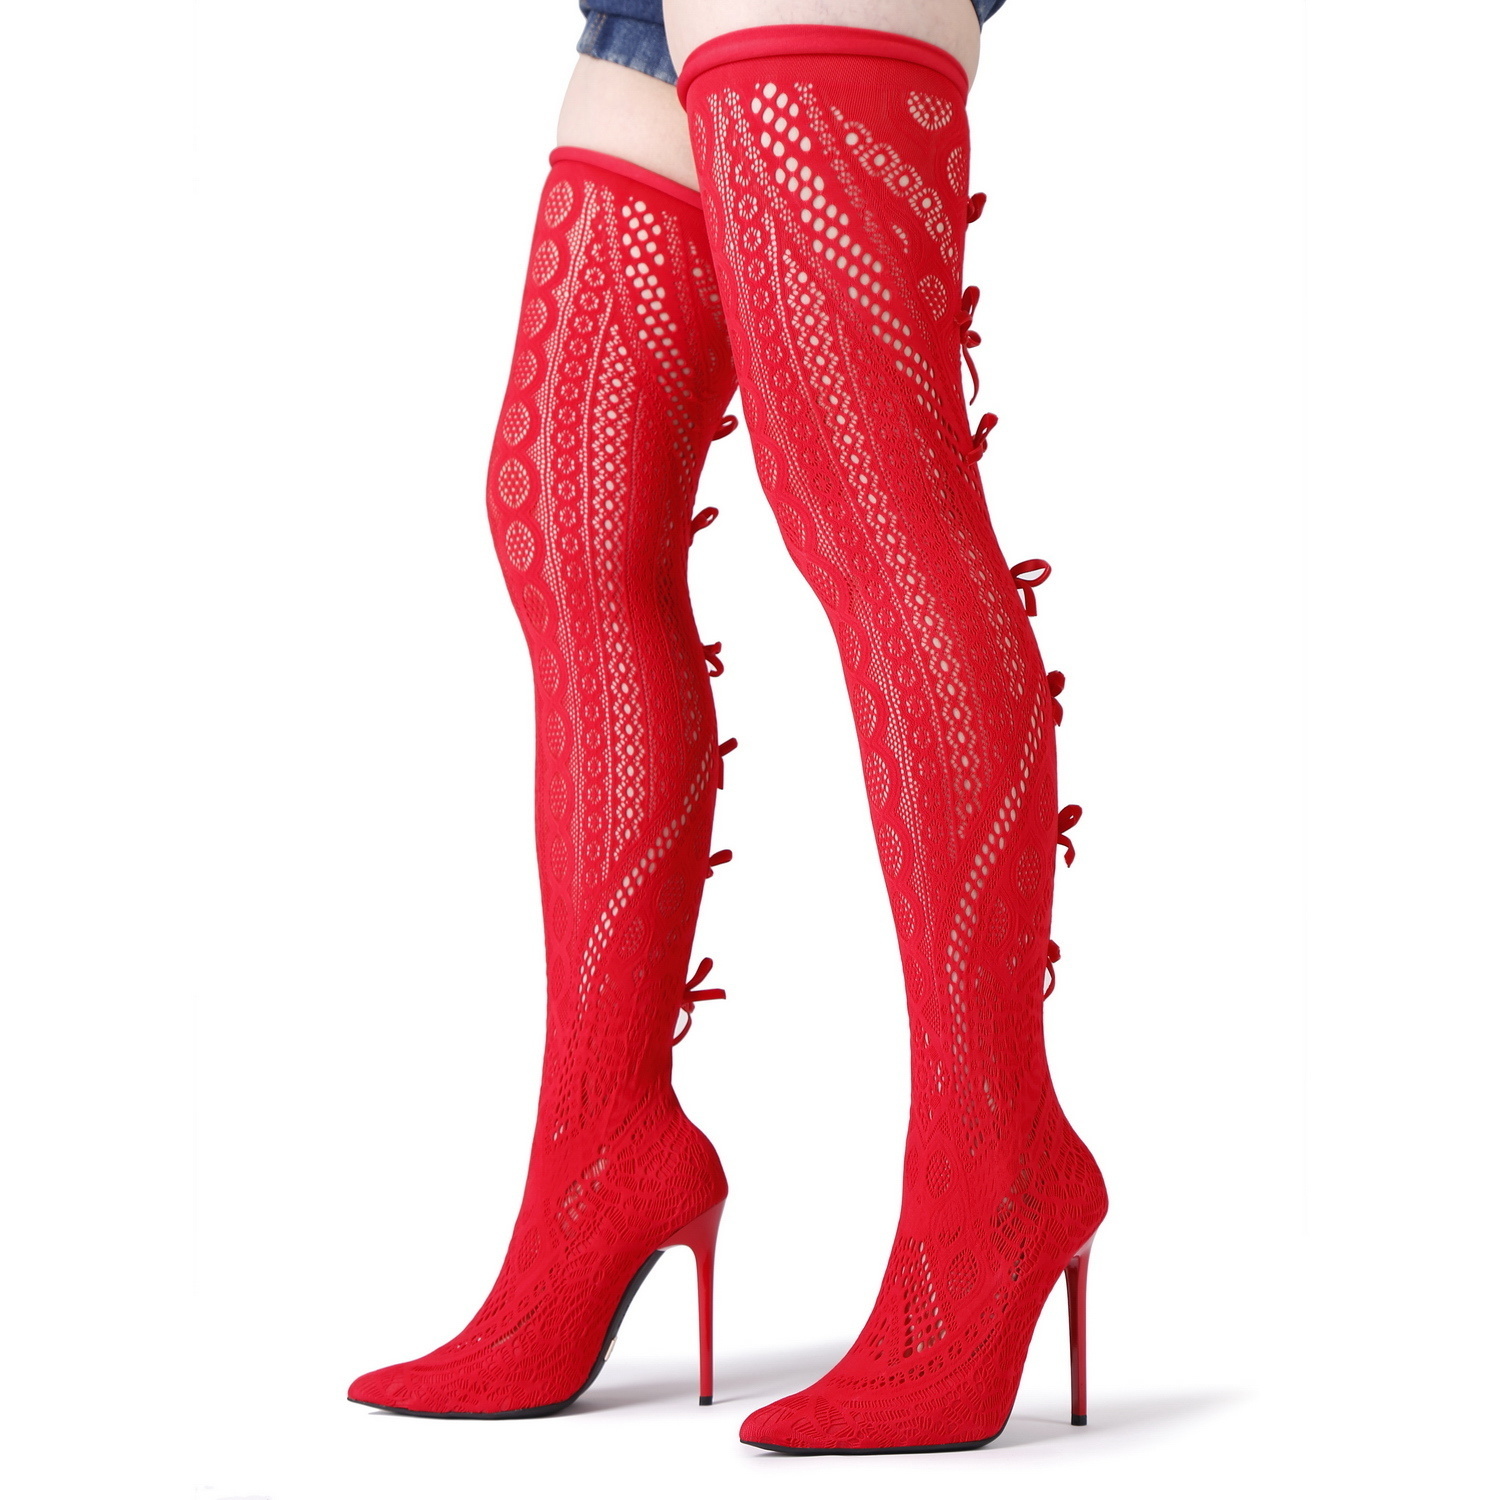 Giaro SARAFINA RED THIGH BOOTS Bootilicious style - Giaro High Heels ...